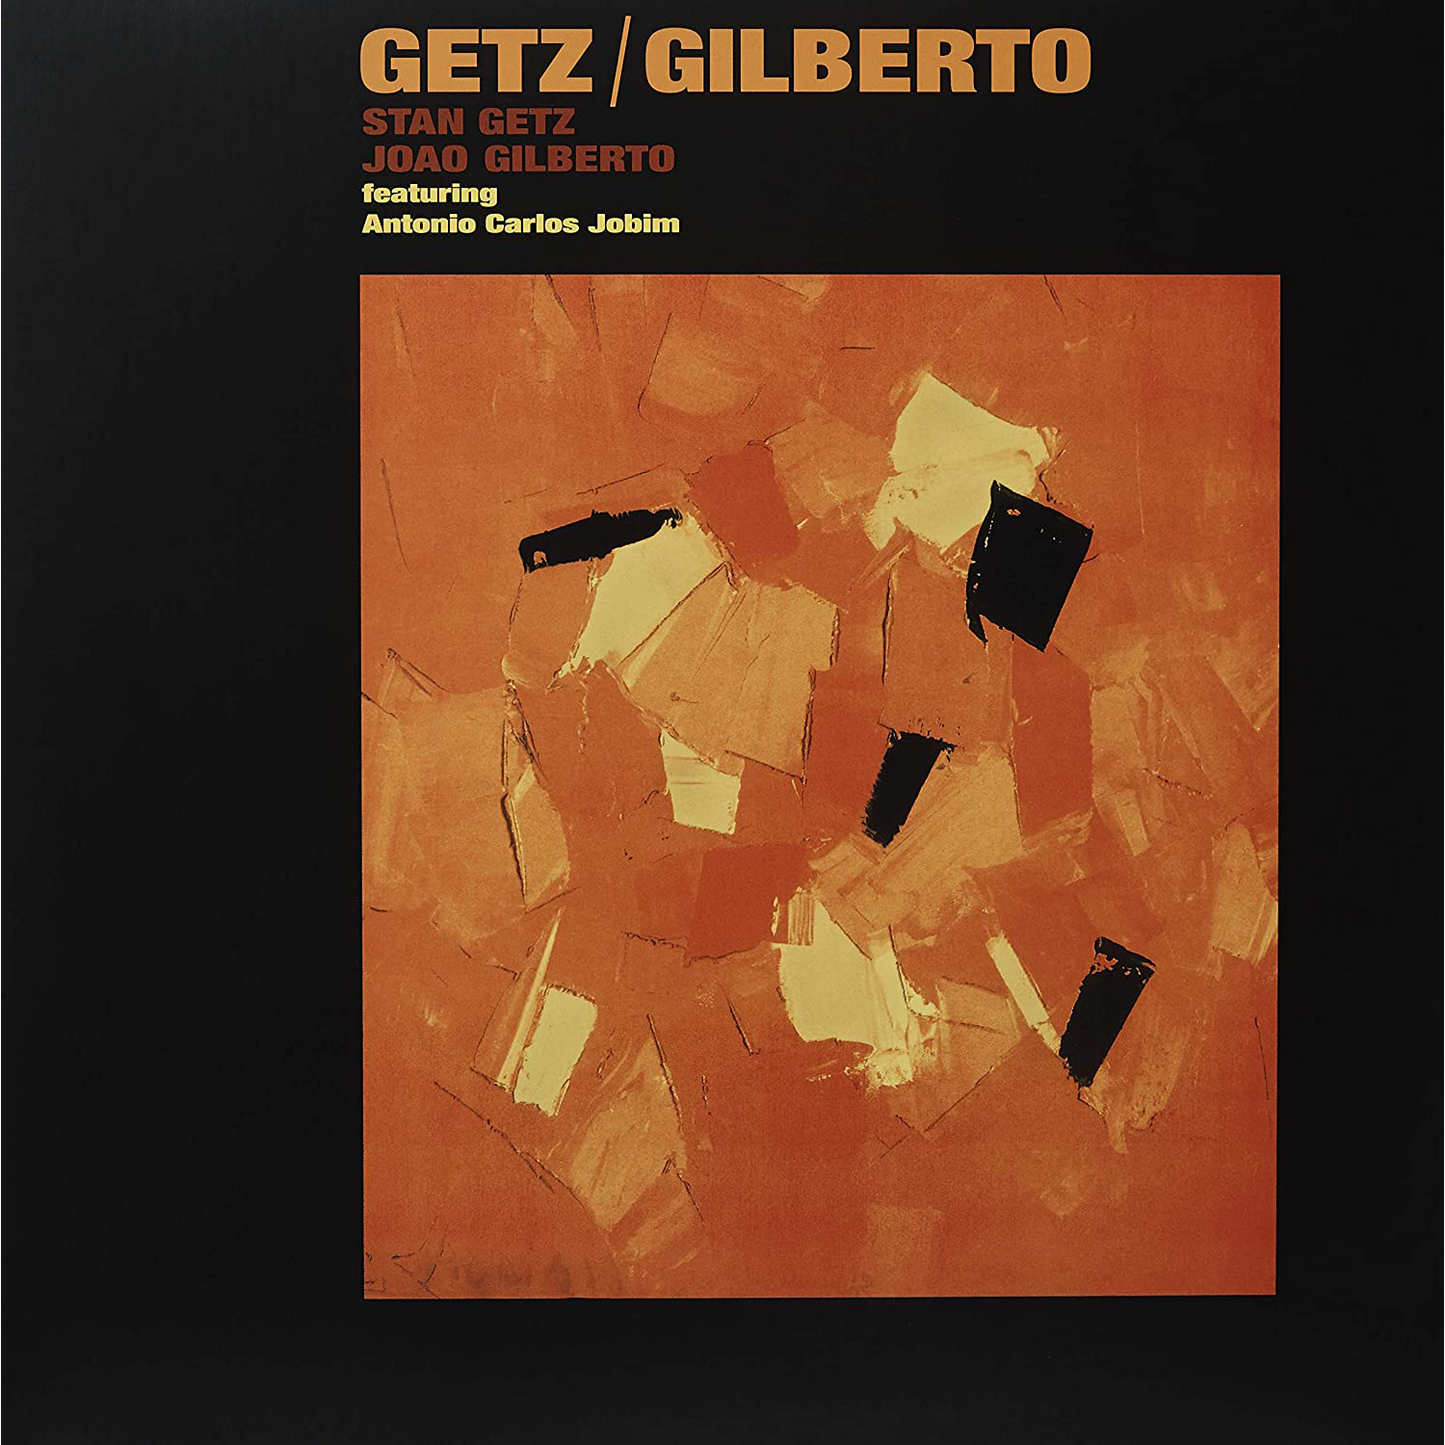 Stan Getz & Joao Gilberto / Getz / Gilberto (180 Gram Vinyl, Deluxe Gatefold Edition)